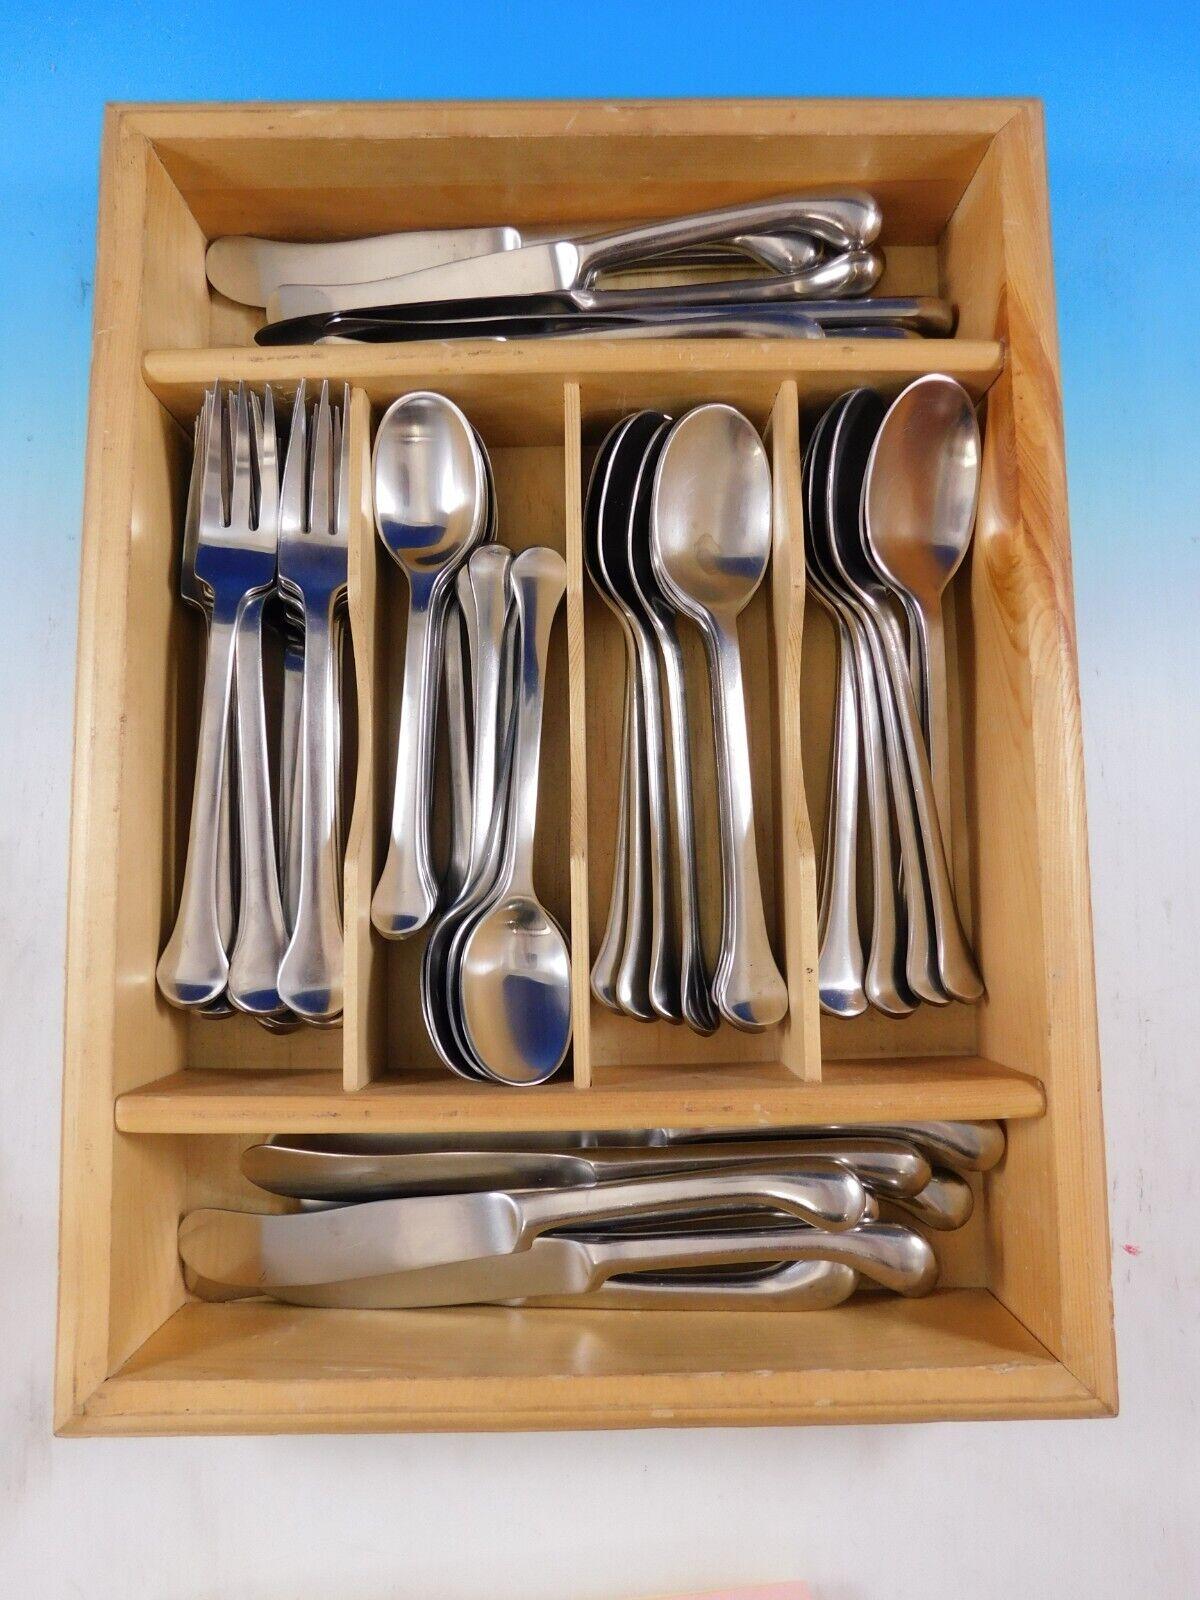 Estate Kobenhavn by Dansk Stainless Steel Flatware set, 72 pieces. This set includes:
18 Dinner Knives, 8 3/4